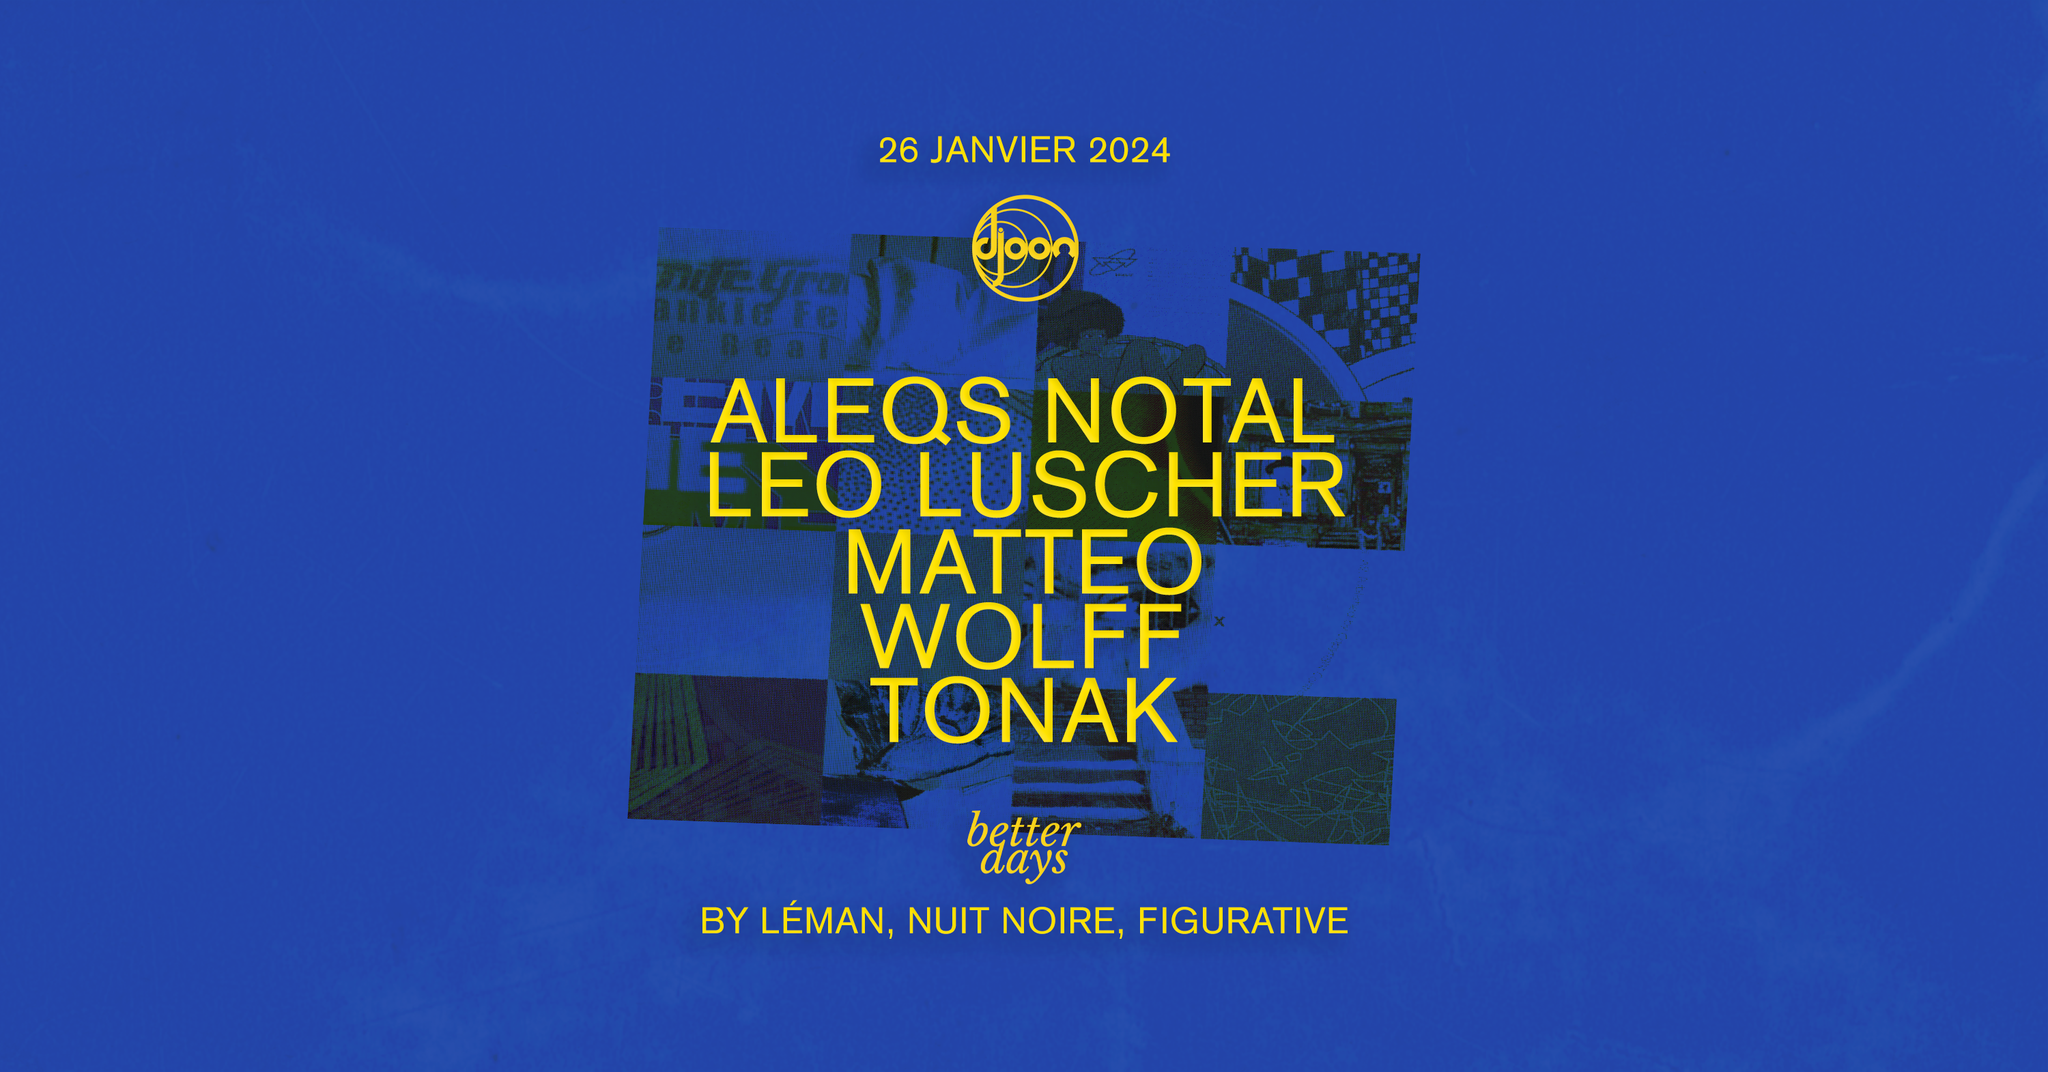 Better Days invite Aleqs Notals - Página frontal